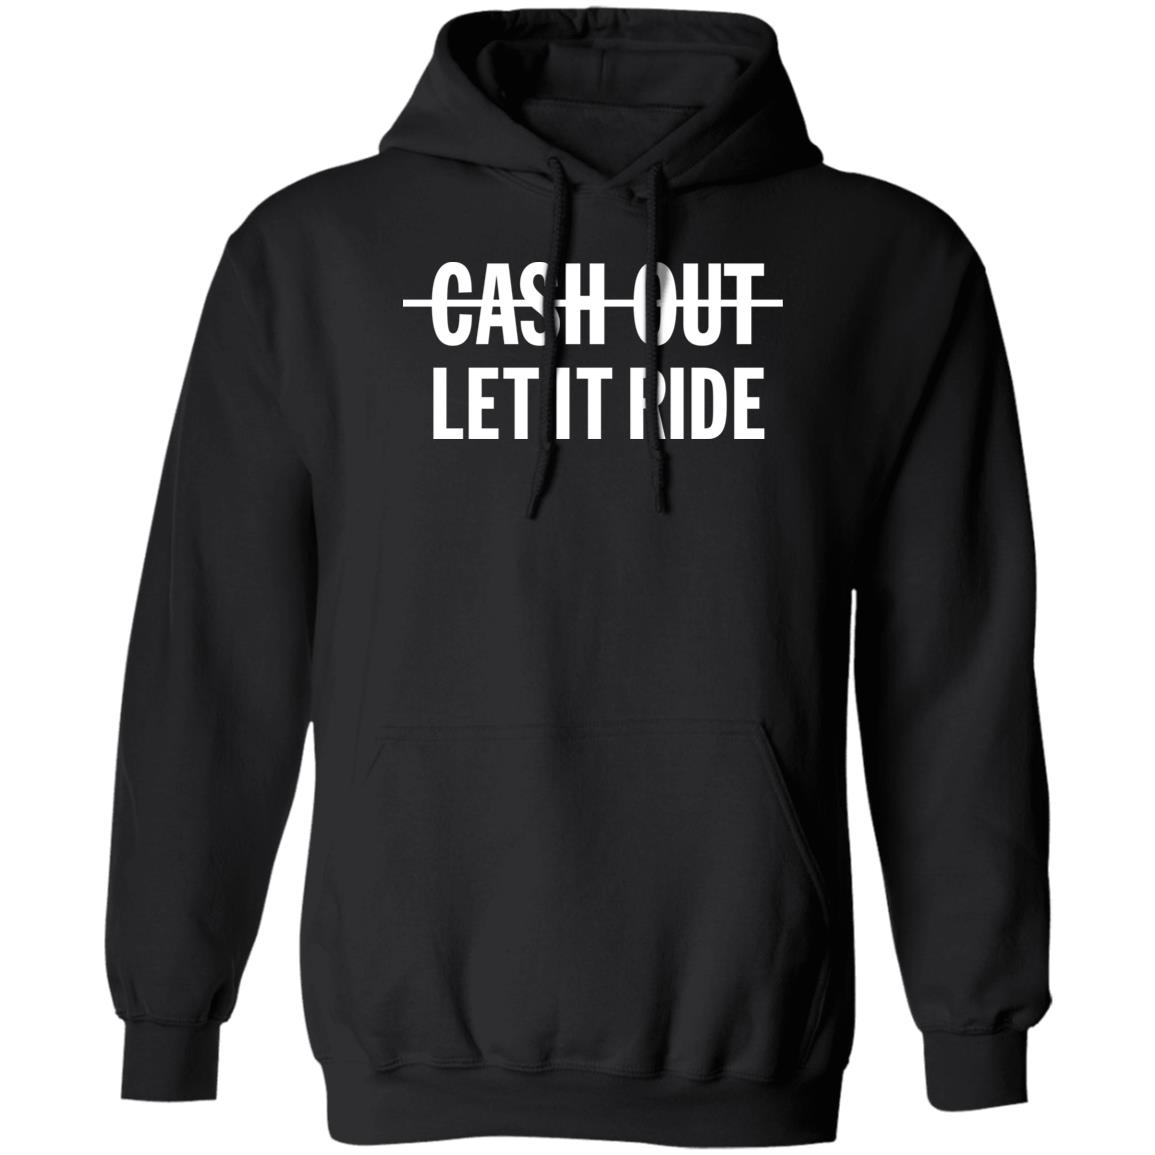 Cash Out Let It Ride Shirt Panetory – Graphic Design Apparel &Amp; Accessories Online